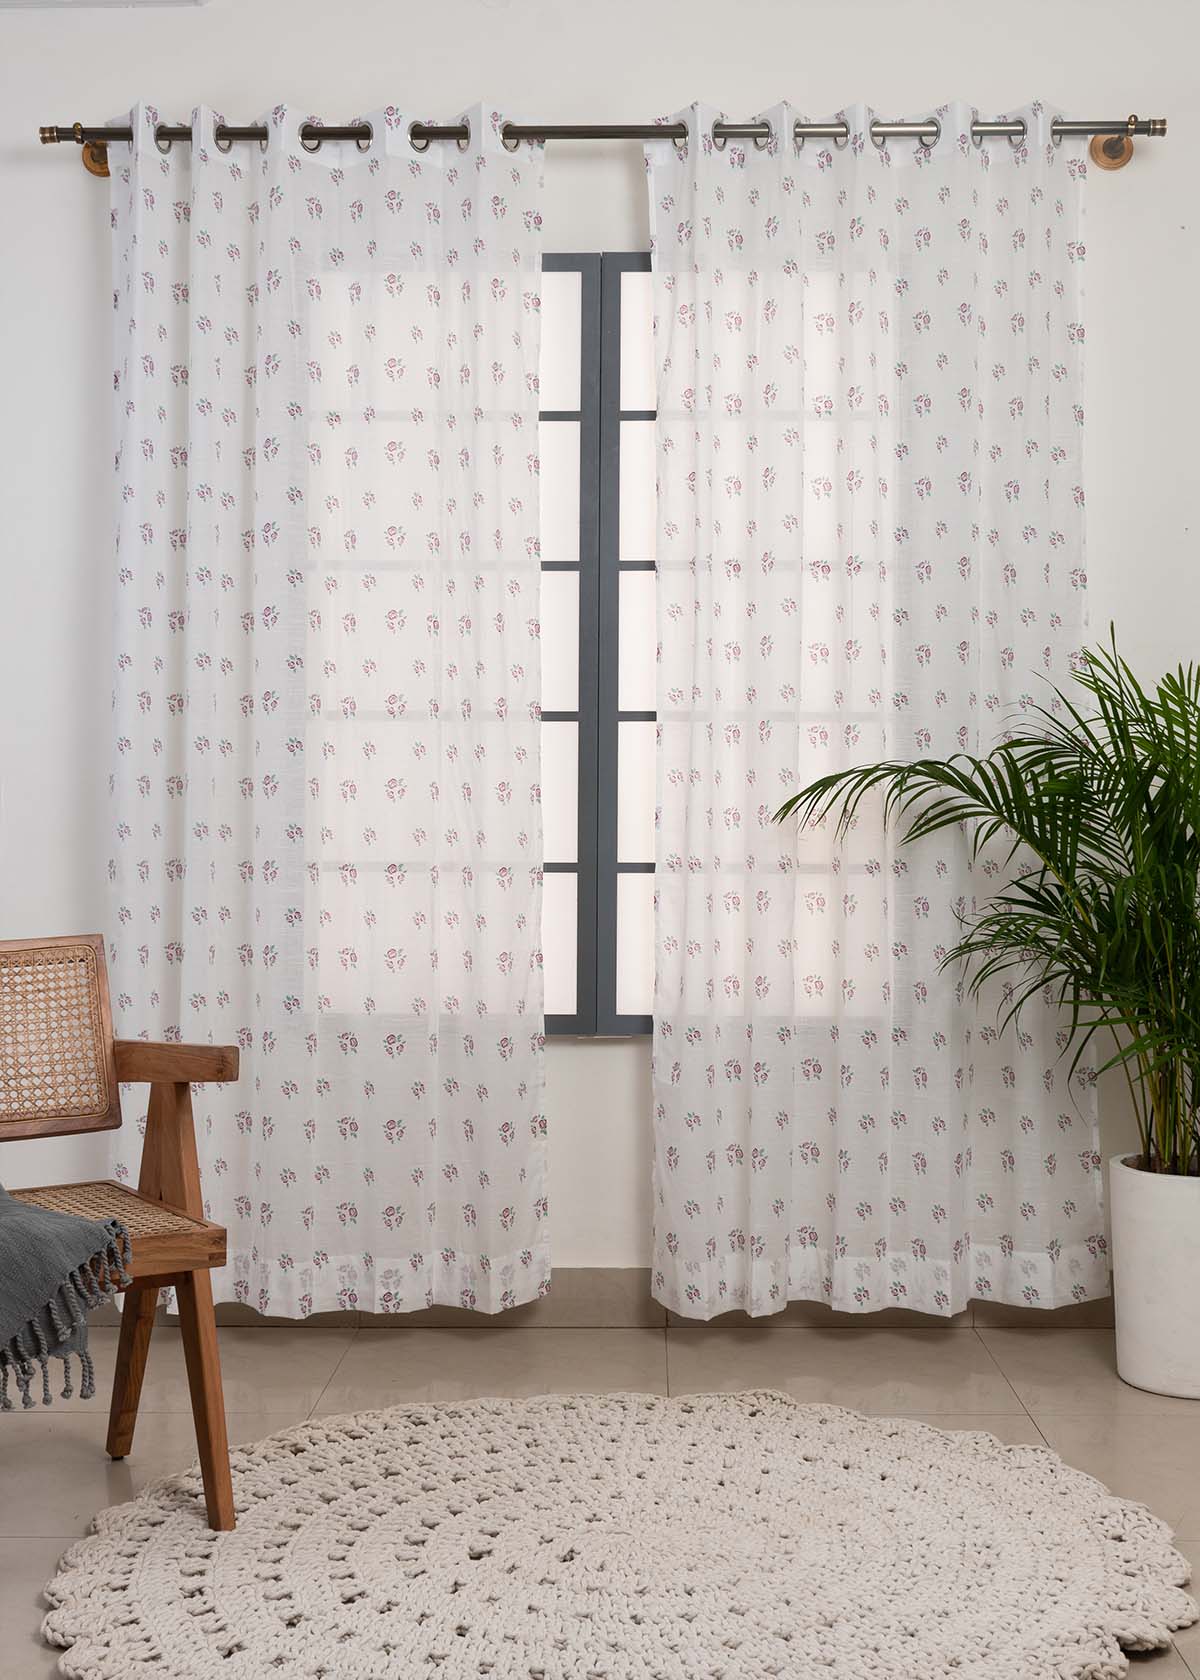 Rose Garden 100% Cotton Sheer floral curtain for Living room - Light filtering - Lavender - Pack of 1